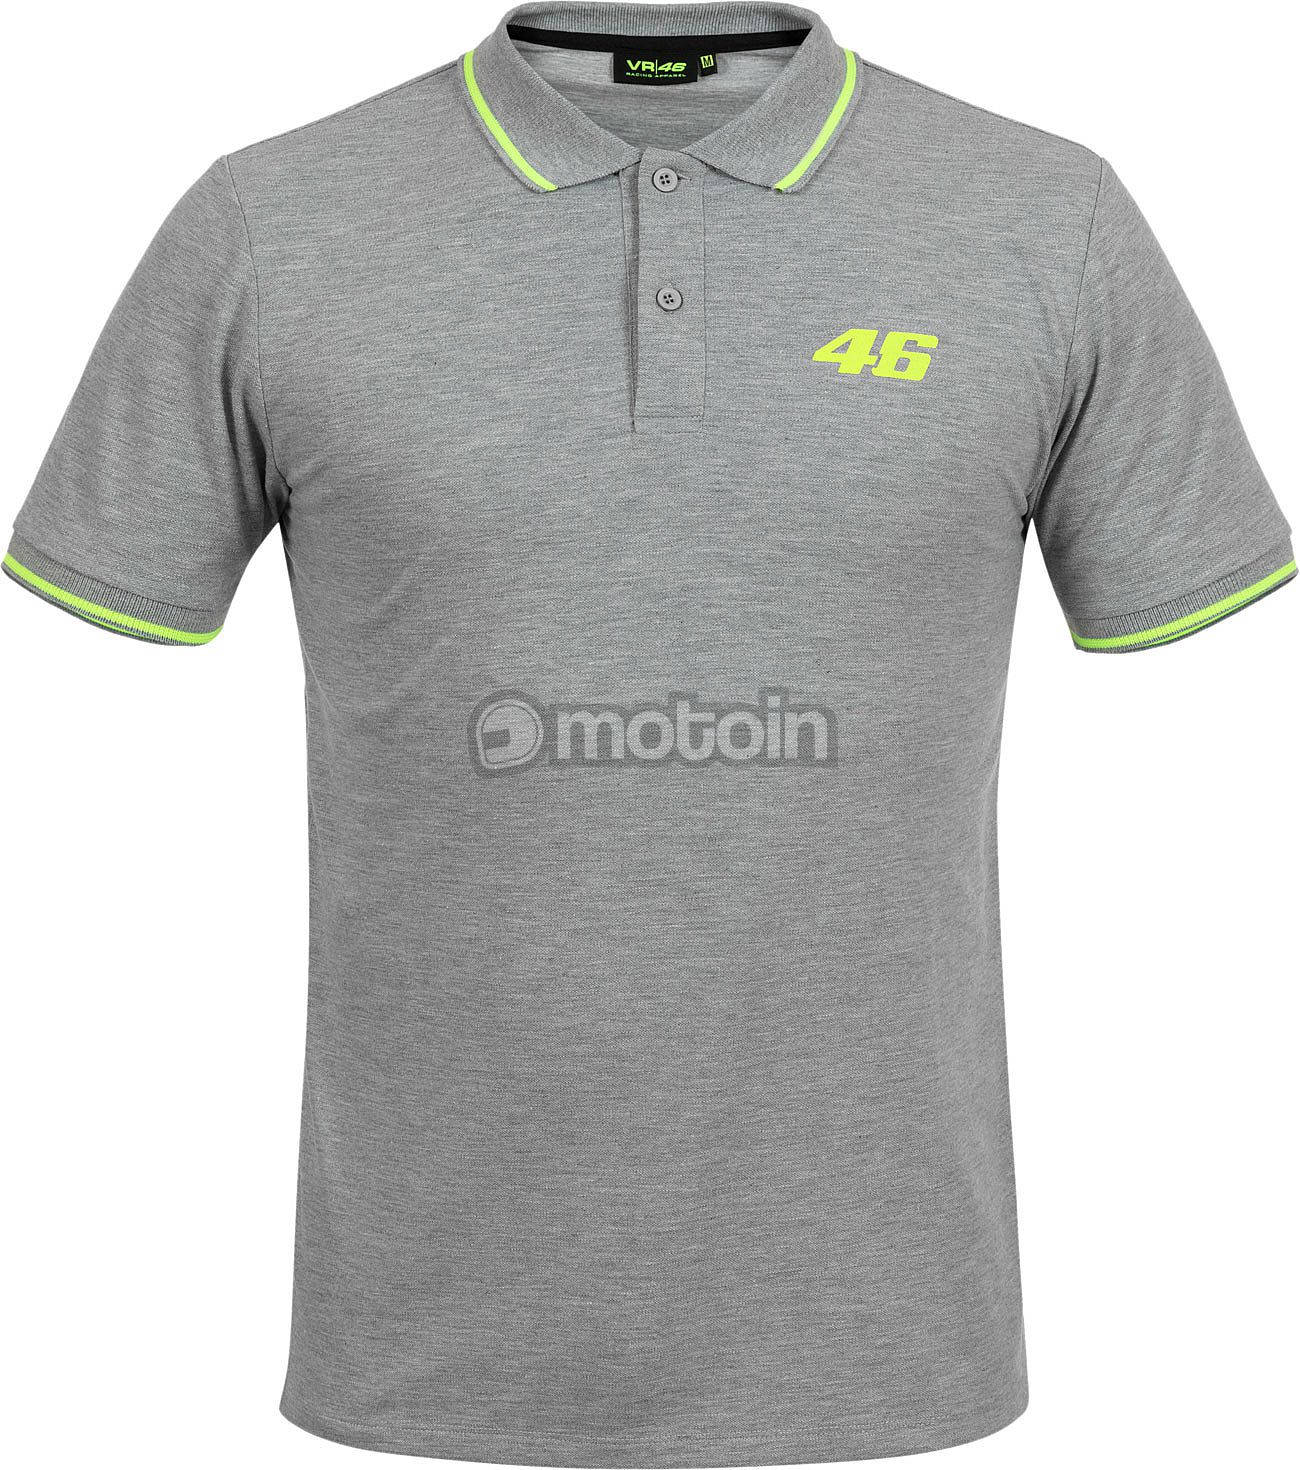 VR46 Racing Apparel Core Collection, polo shirt